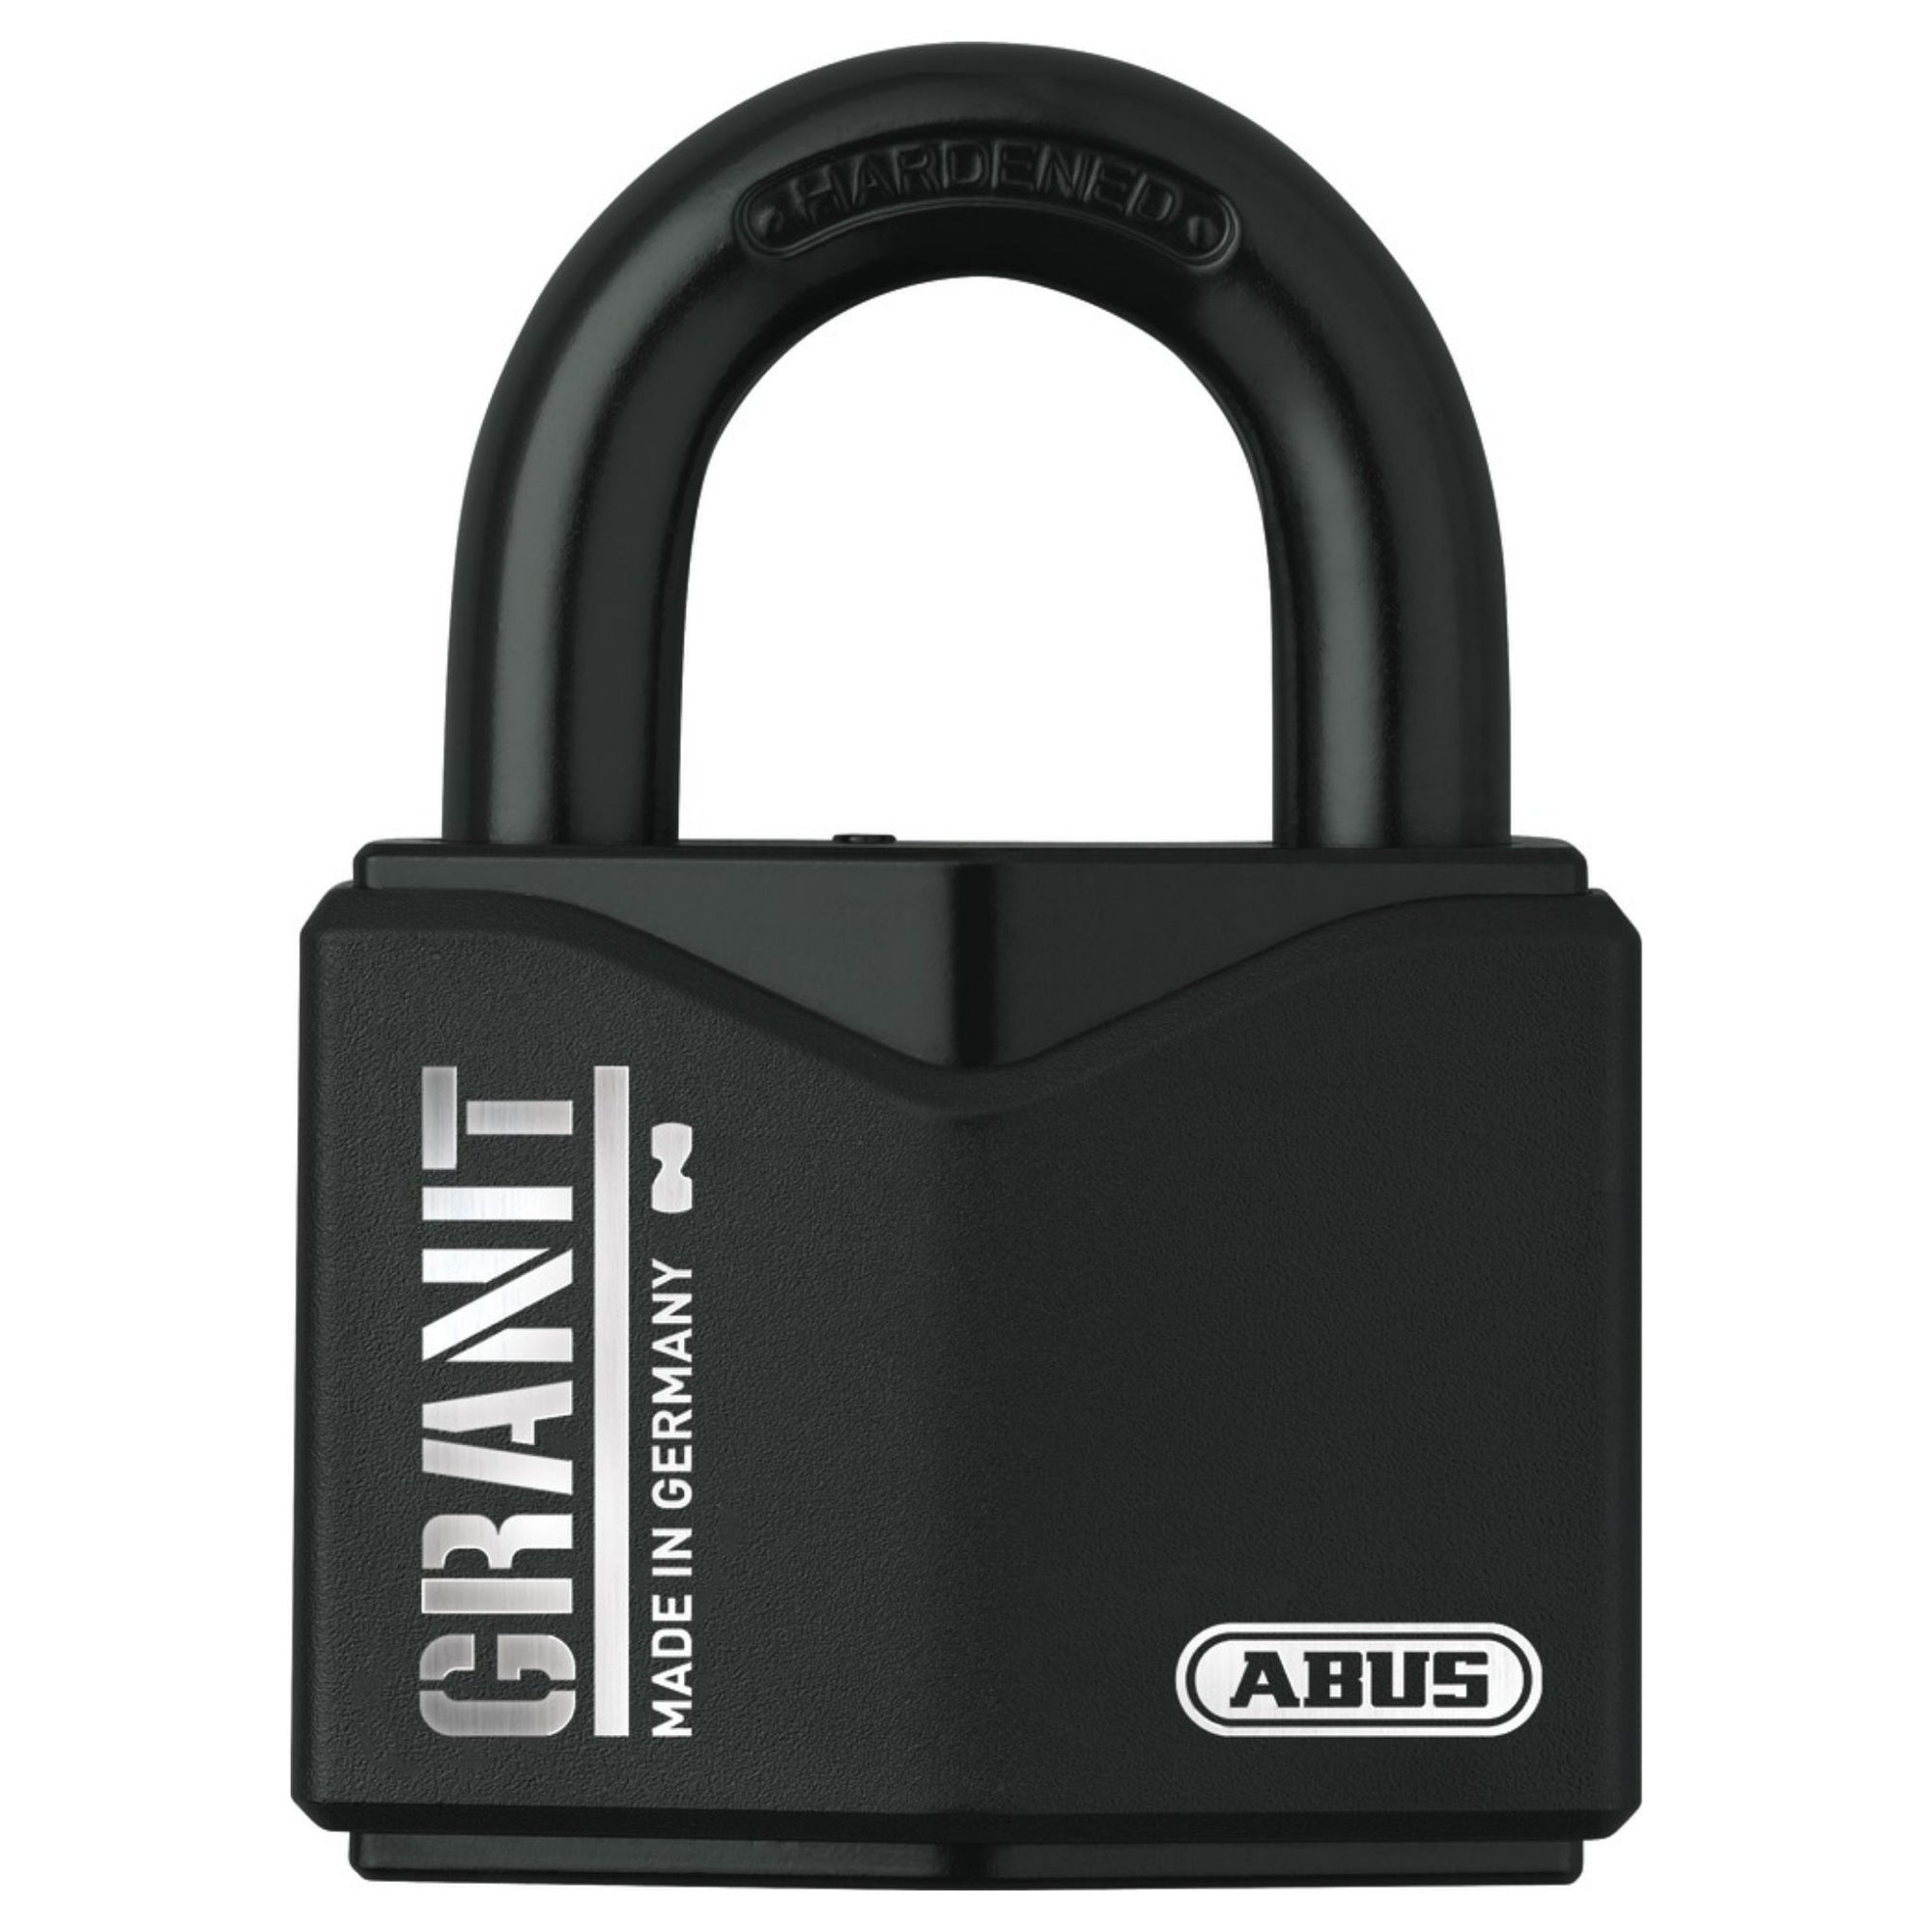 Abus 37RK/55 KA 121512 Granit Lock Keyed Alike Black Granite Padlocks Matched to Existing Key# KA121512 - The Lock Source